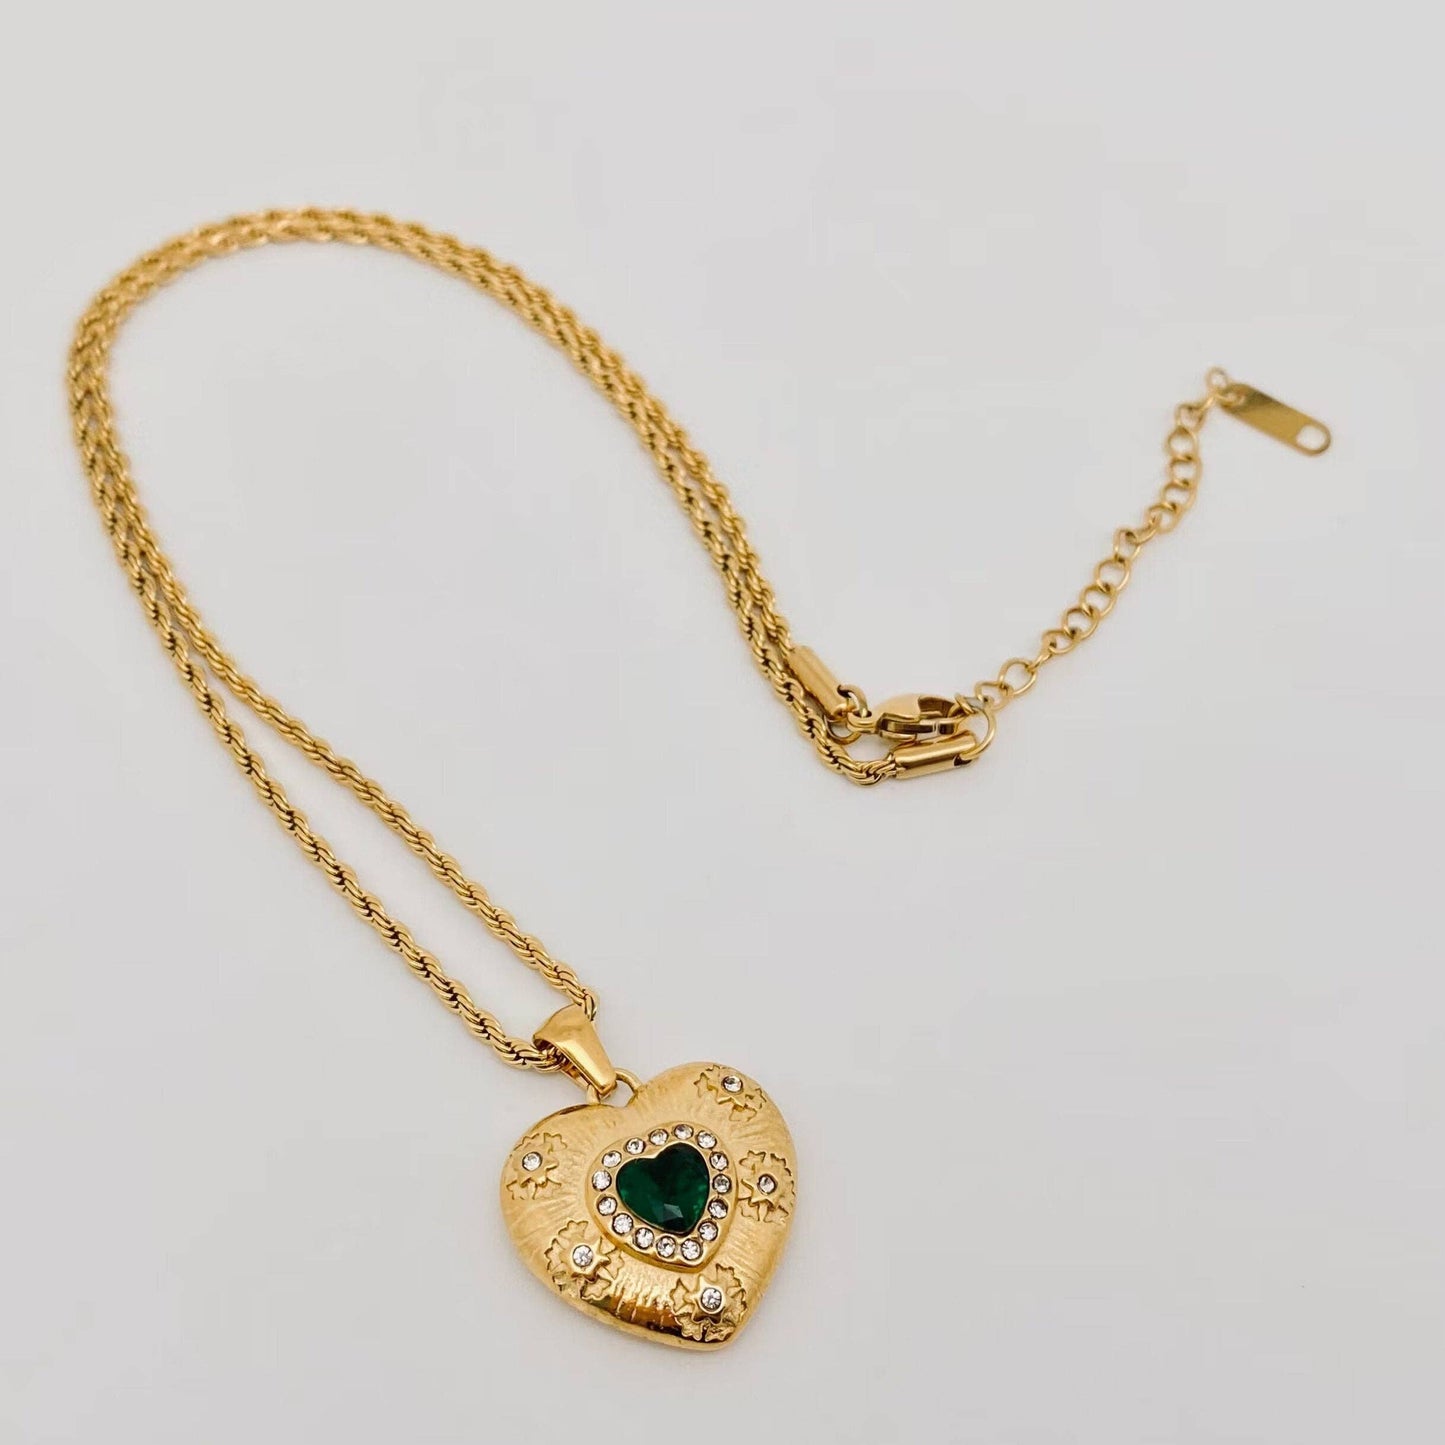 Heart Chakra Heart Pendant Necklace